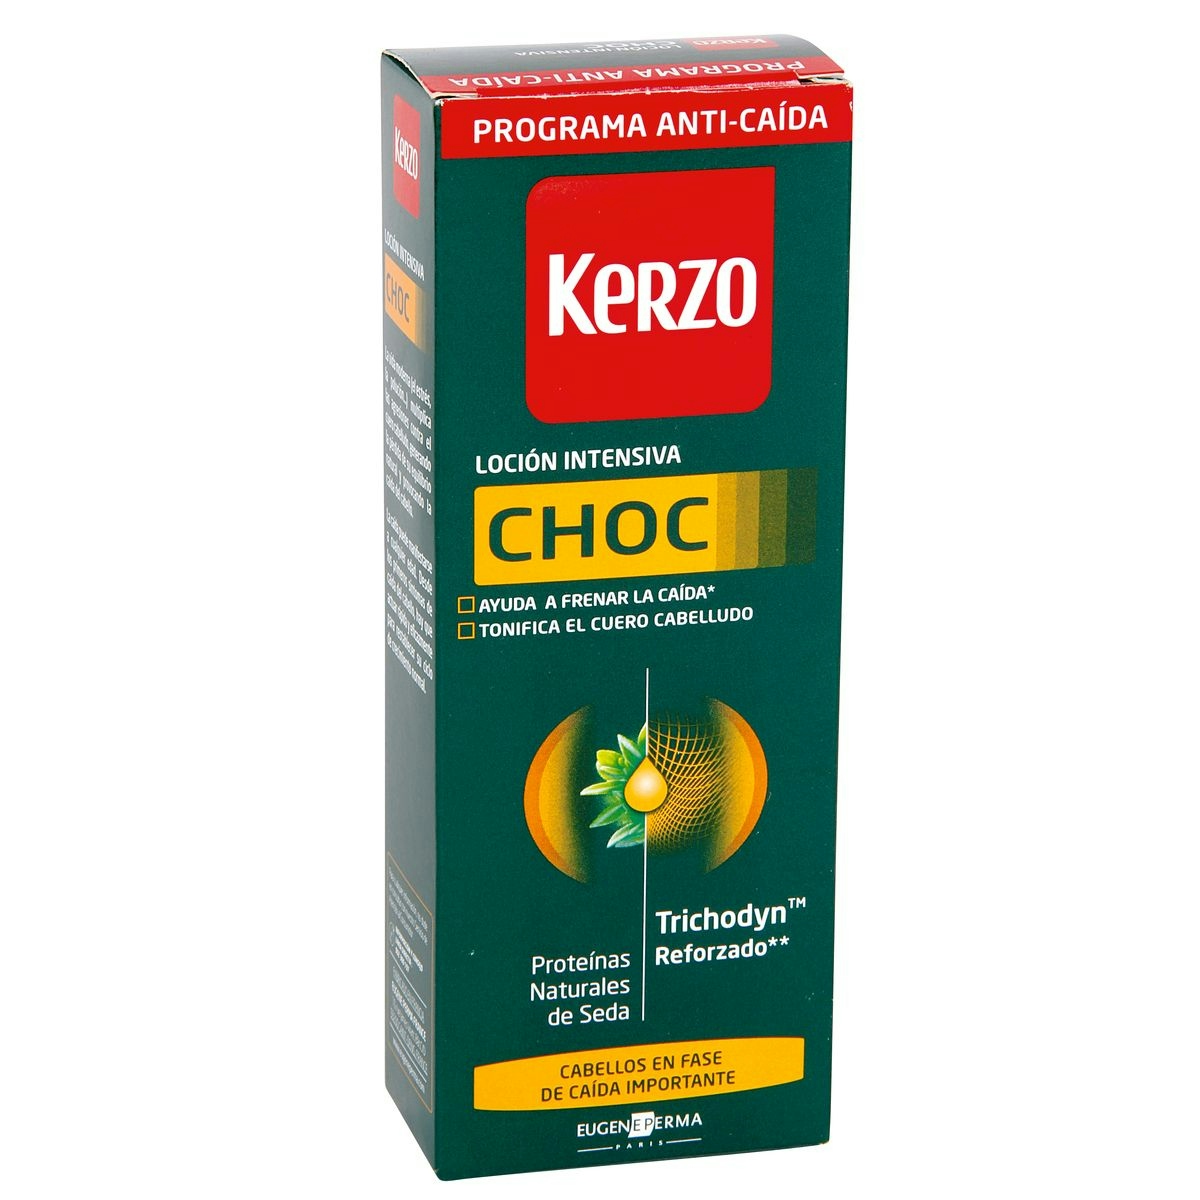 Loción intensiva anti-caida Choc KERZO 150 ml